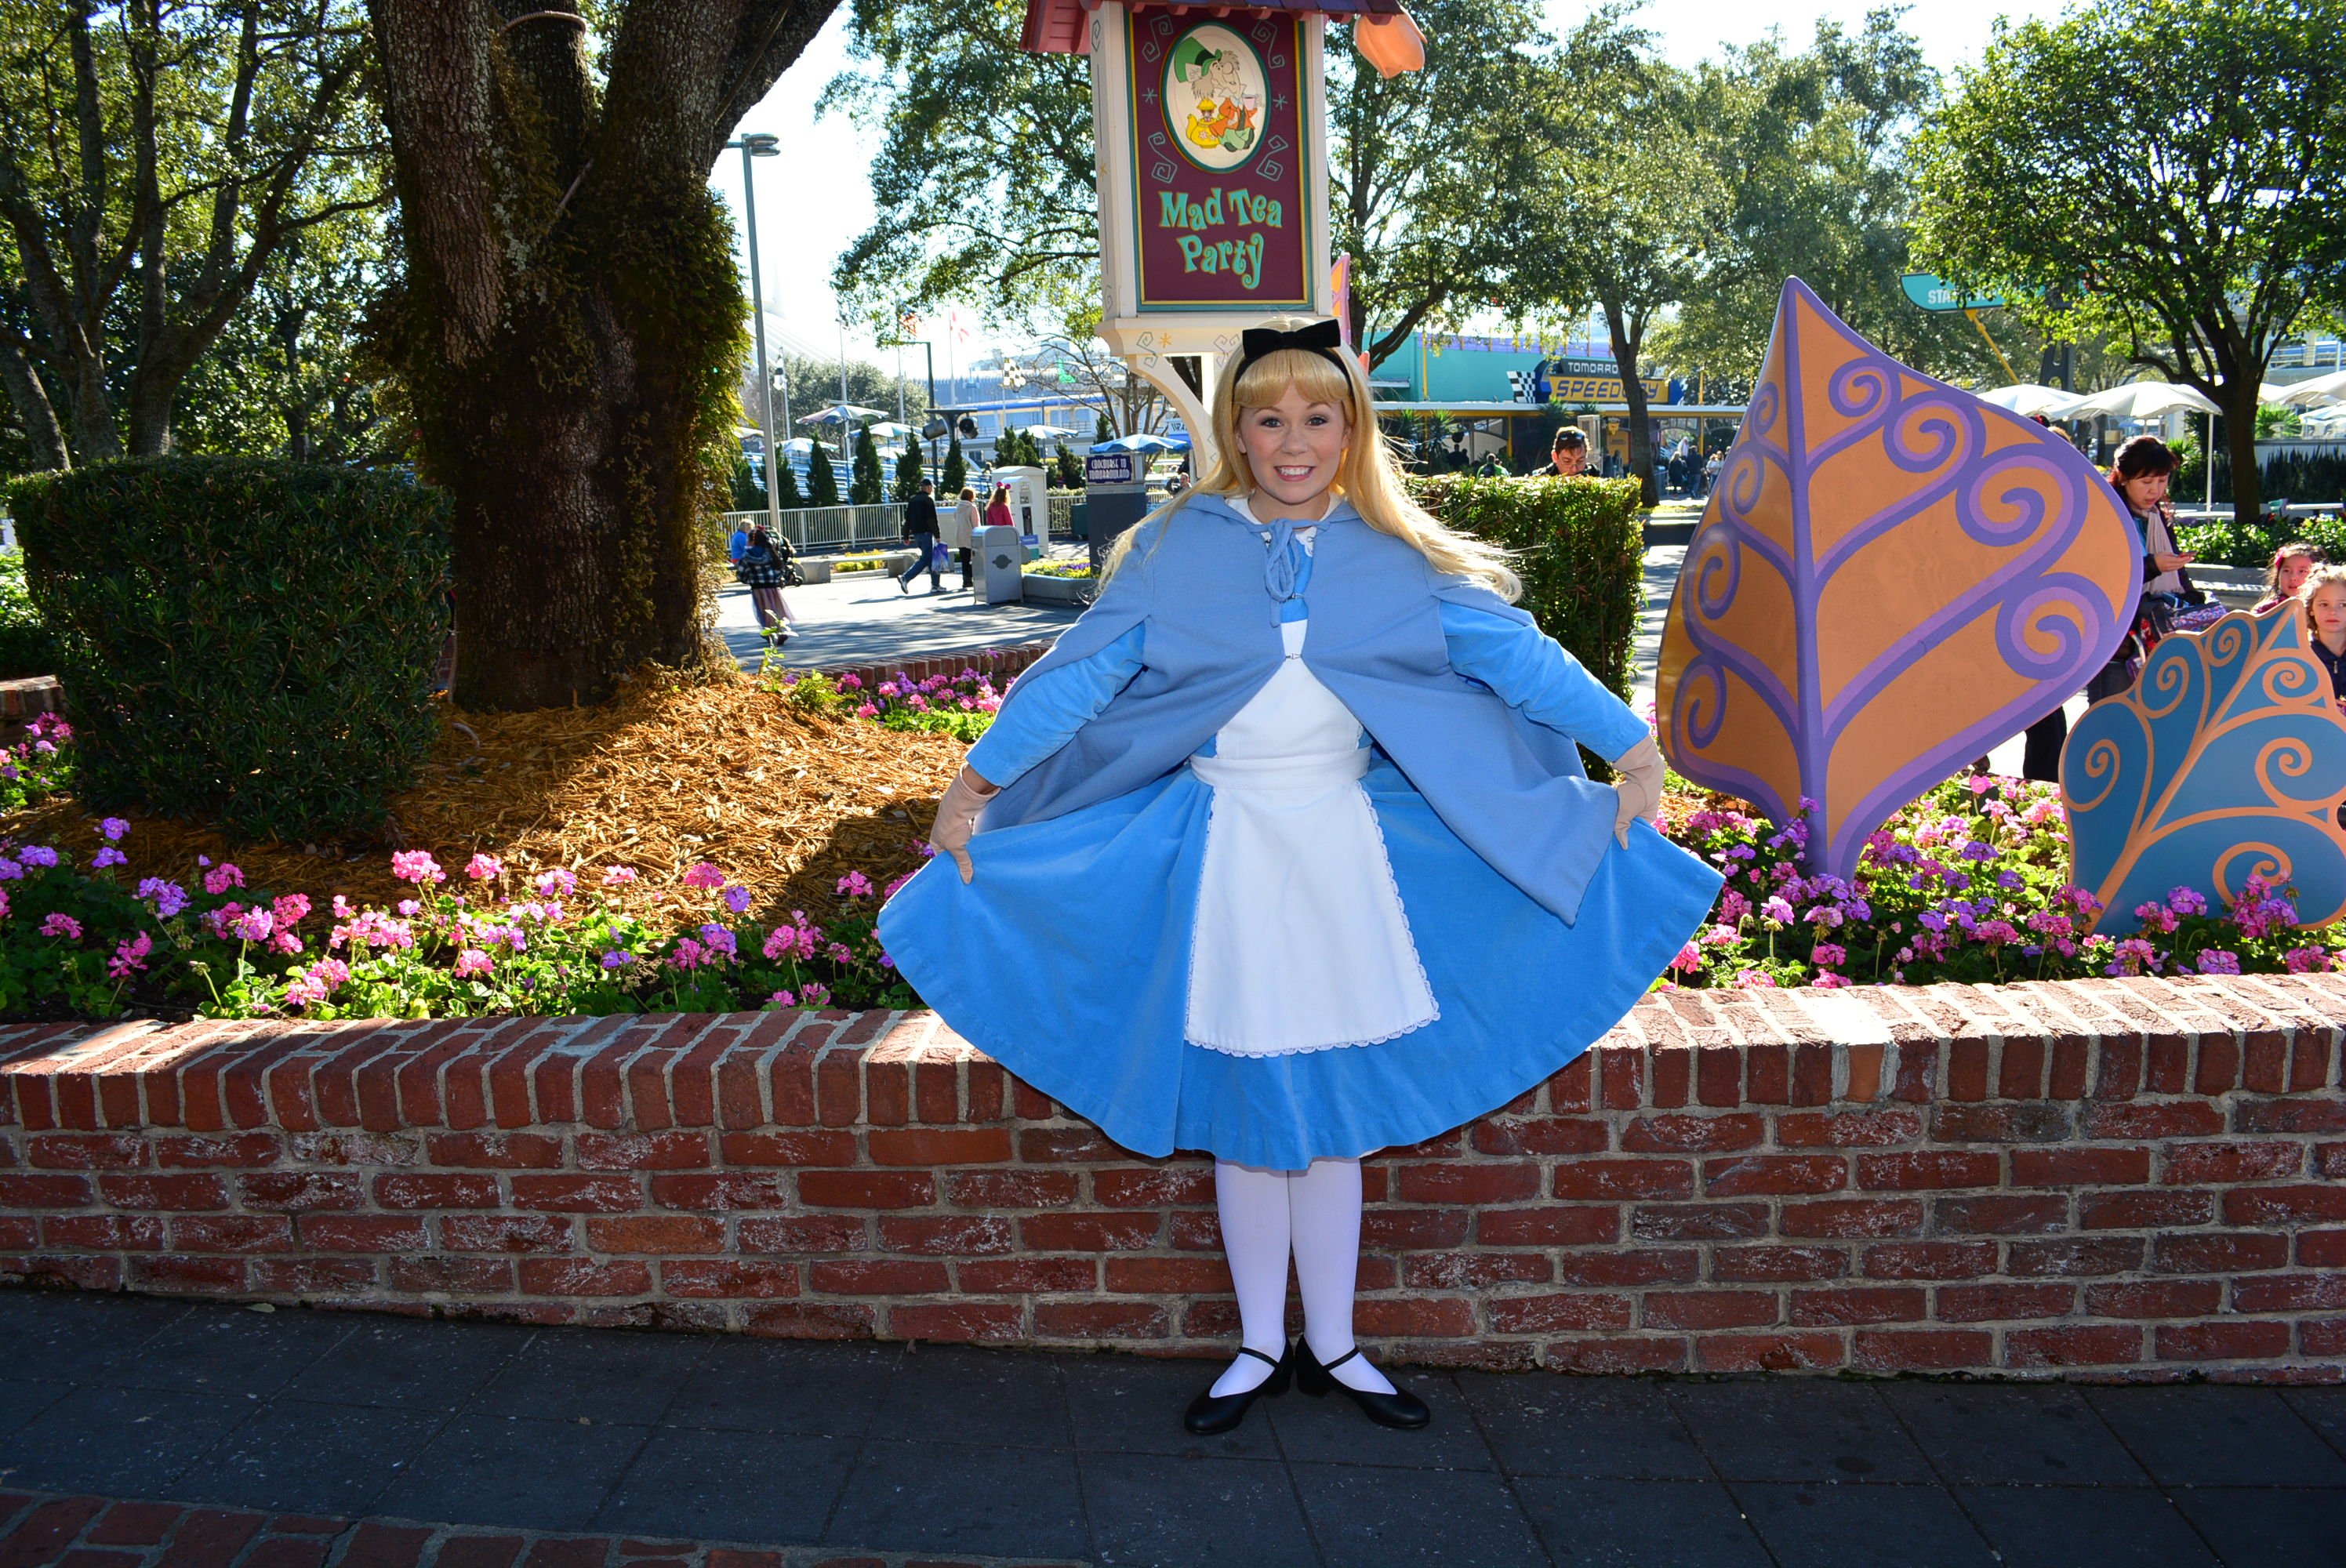 Walt Disney World, Magic Kingdom, Fantasyland, Mad Tea Party, Alice in Wonderland, Meet and Greet